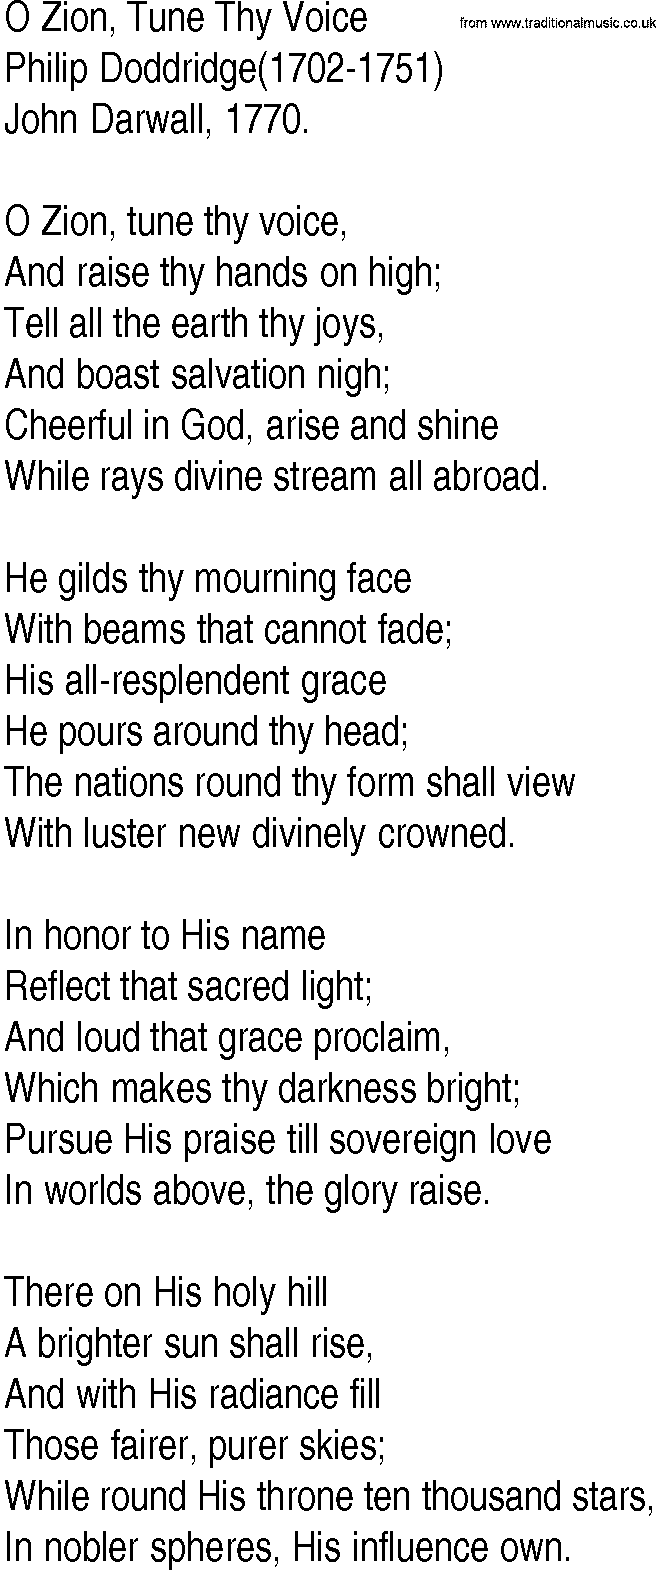 Hymn and Gospel Song: O Zion, Tune Thy Voice by Philip Doddridge lyrics